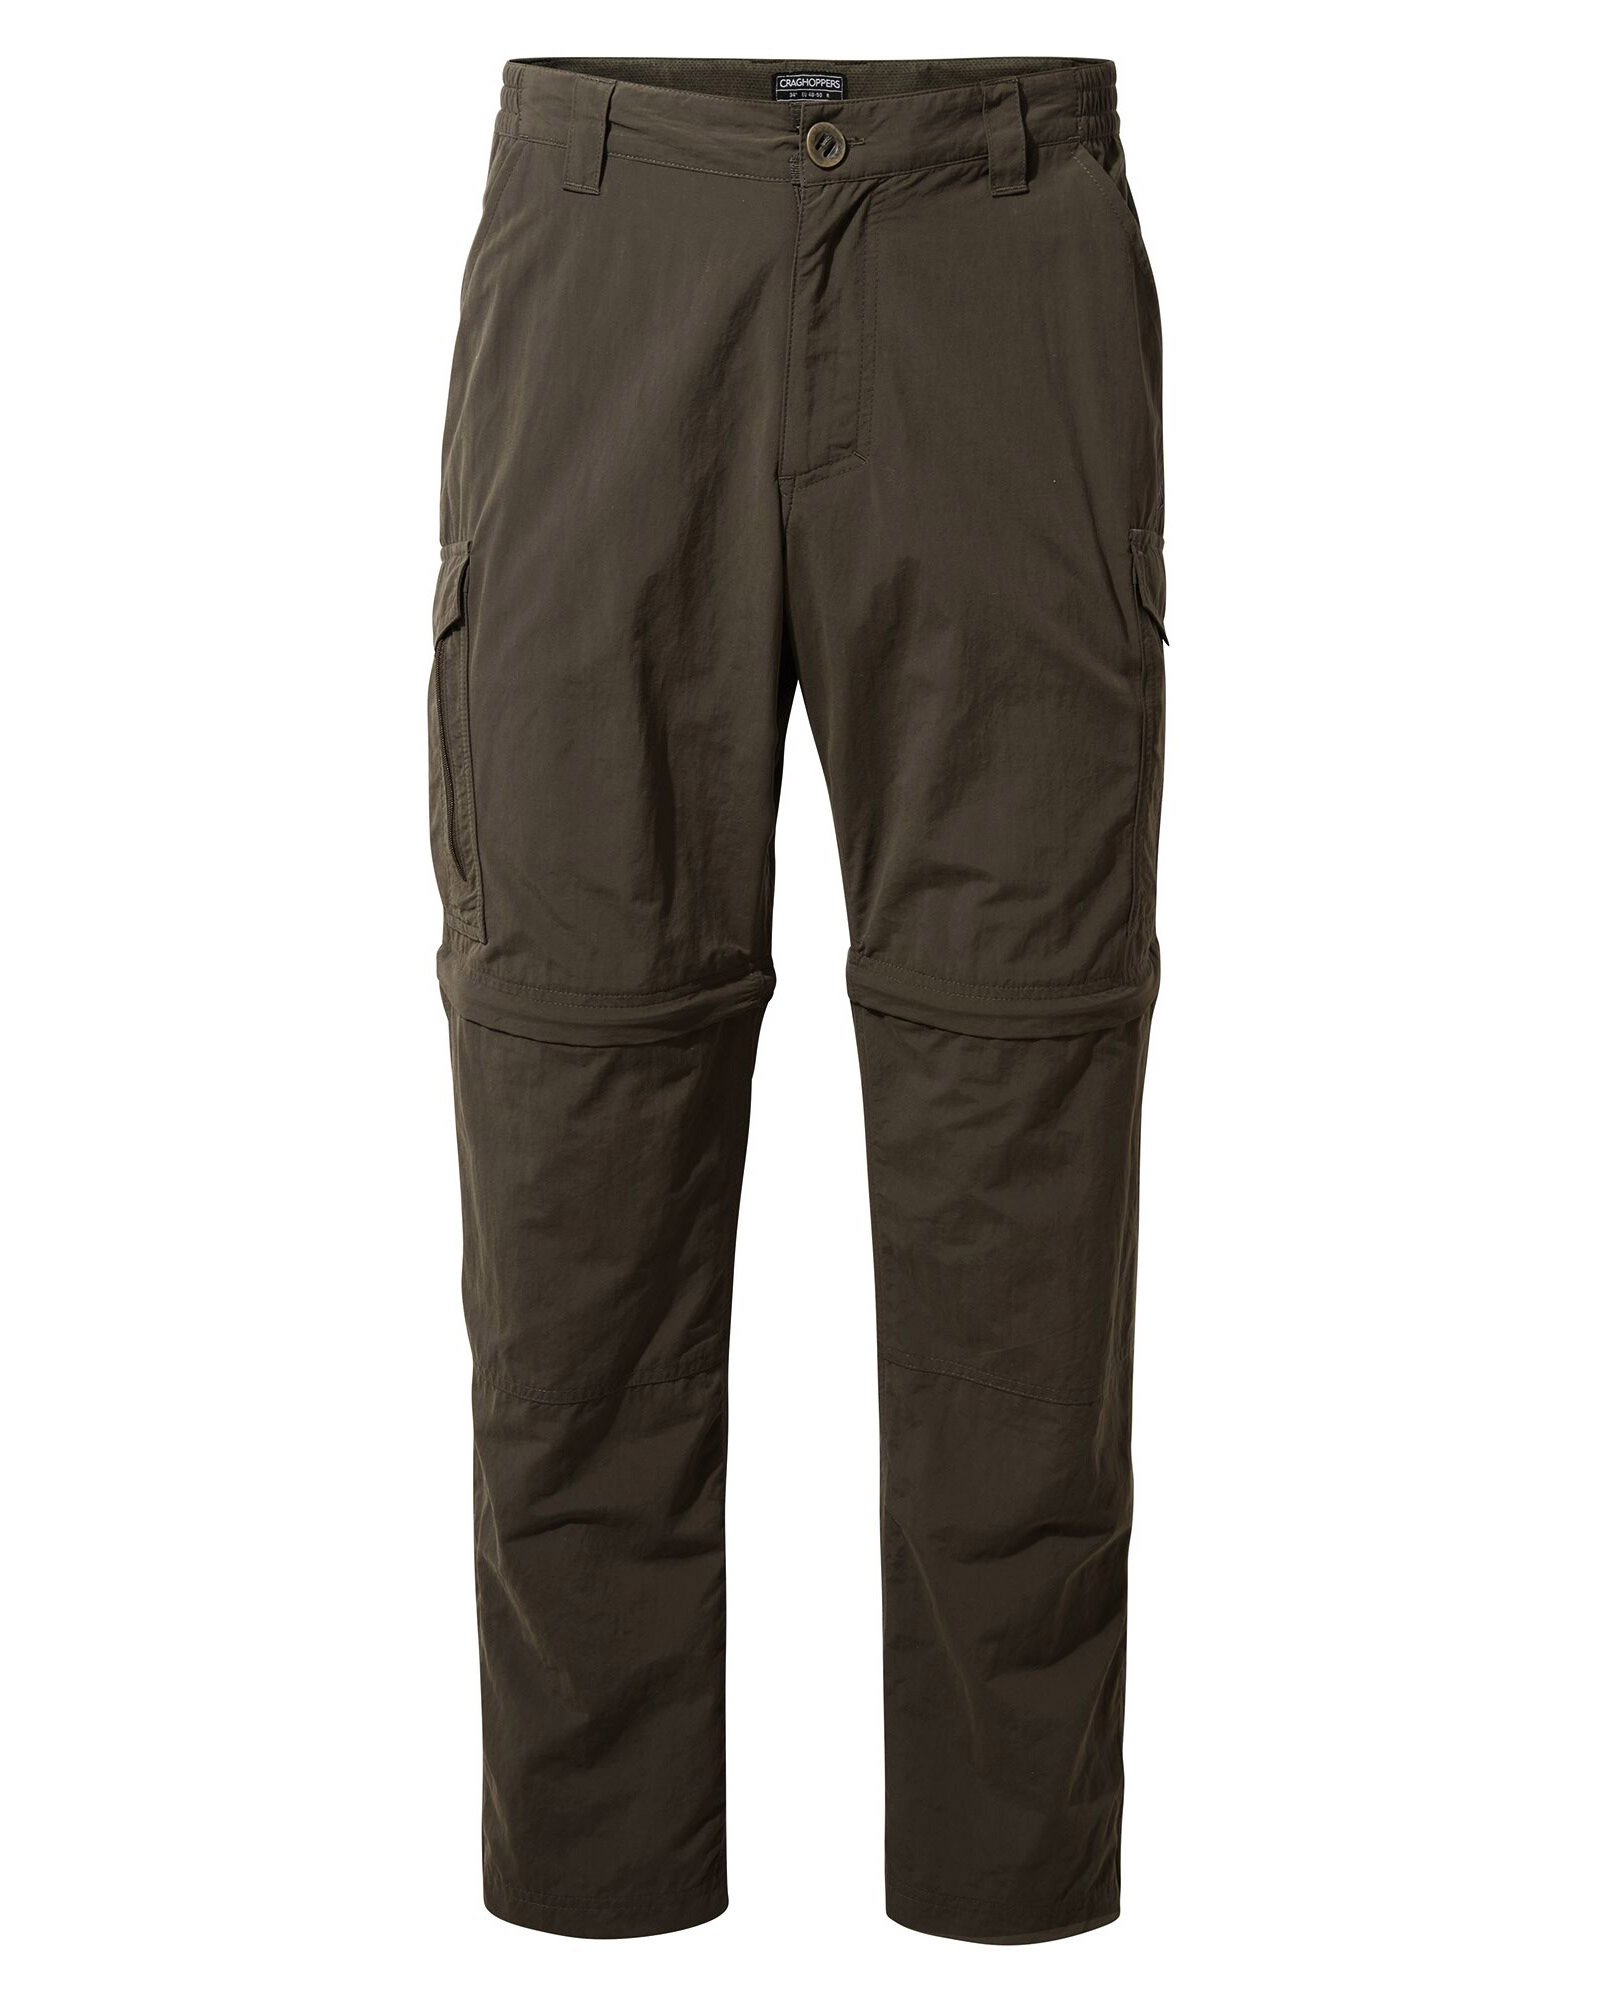 Craghoppers NosiLife Men’s Convertible Pants   Regular Leg - Woodland Green 30"